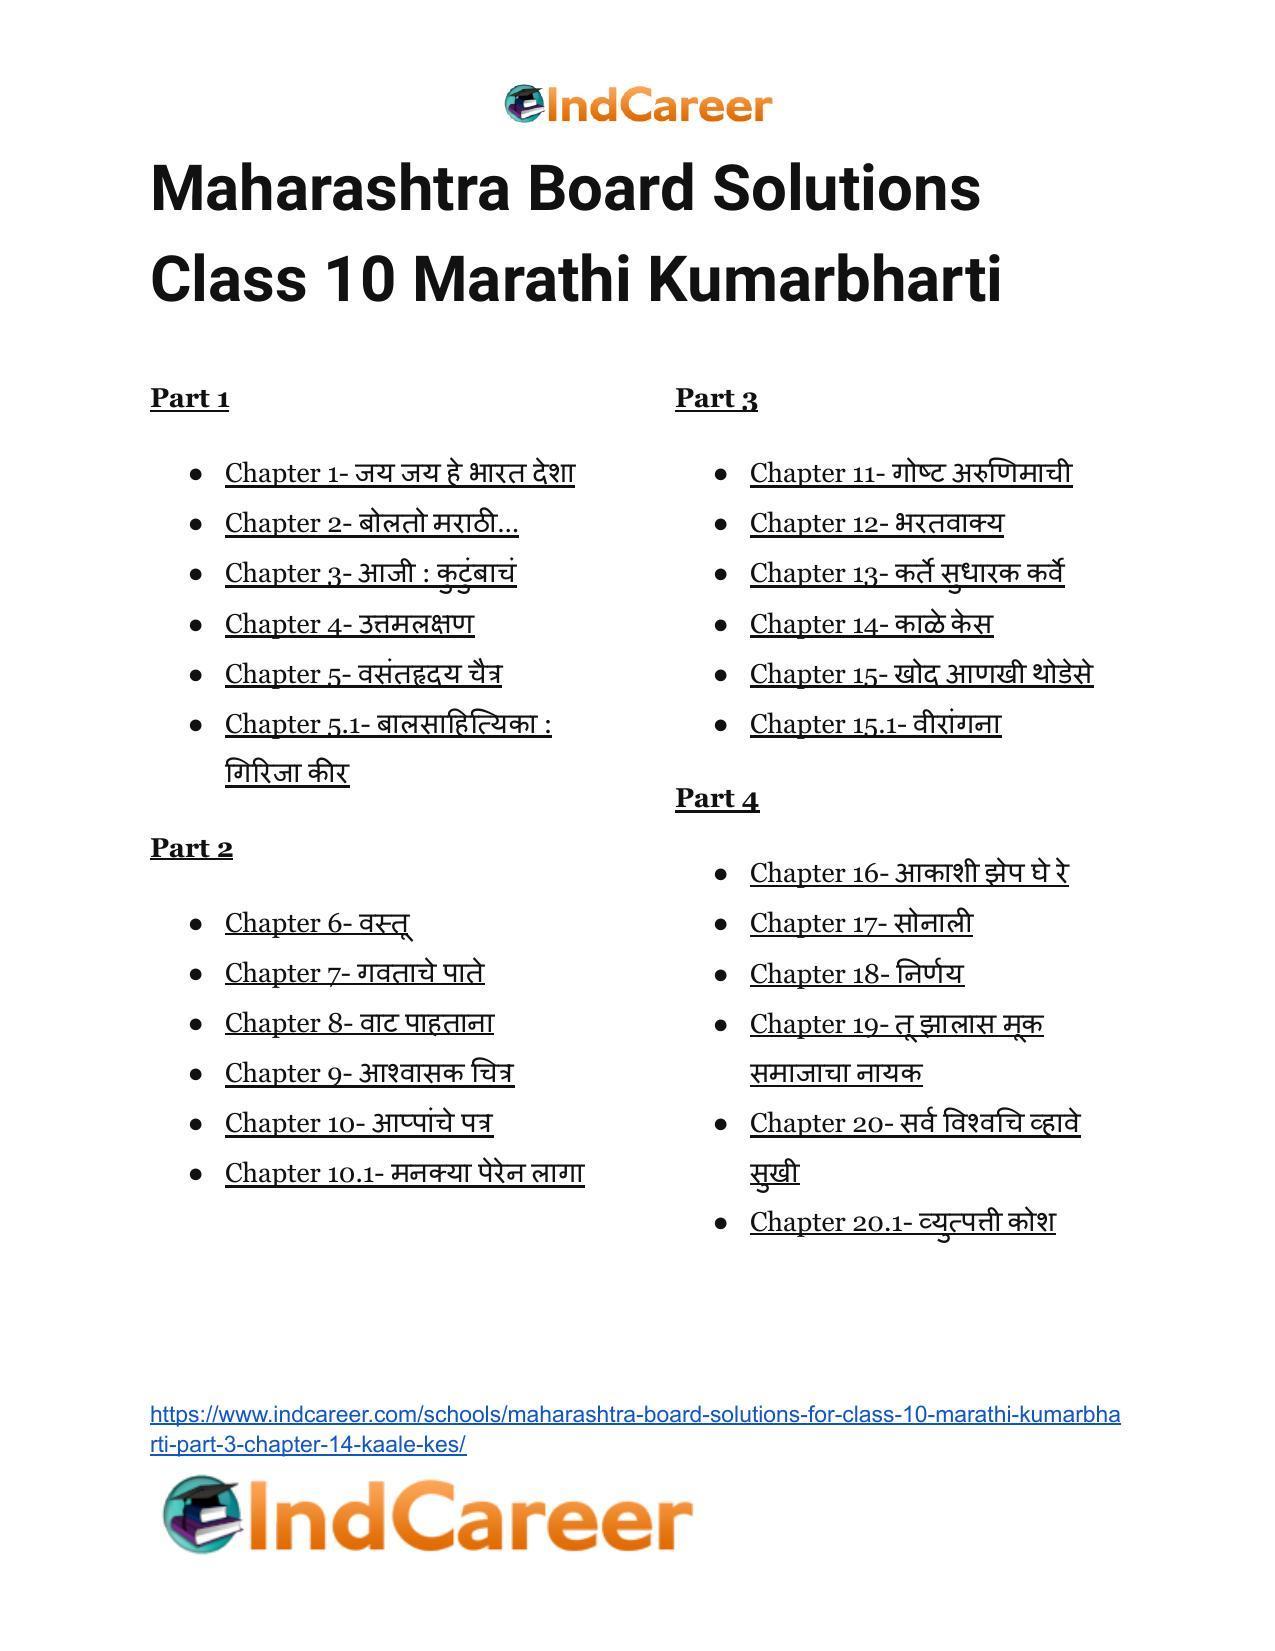 Maharashtra Board Solutions for Class 10- Marathi Kumarbharti (Part- 3): Chapter 14- काळे केस - Page 20